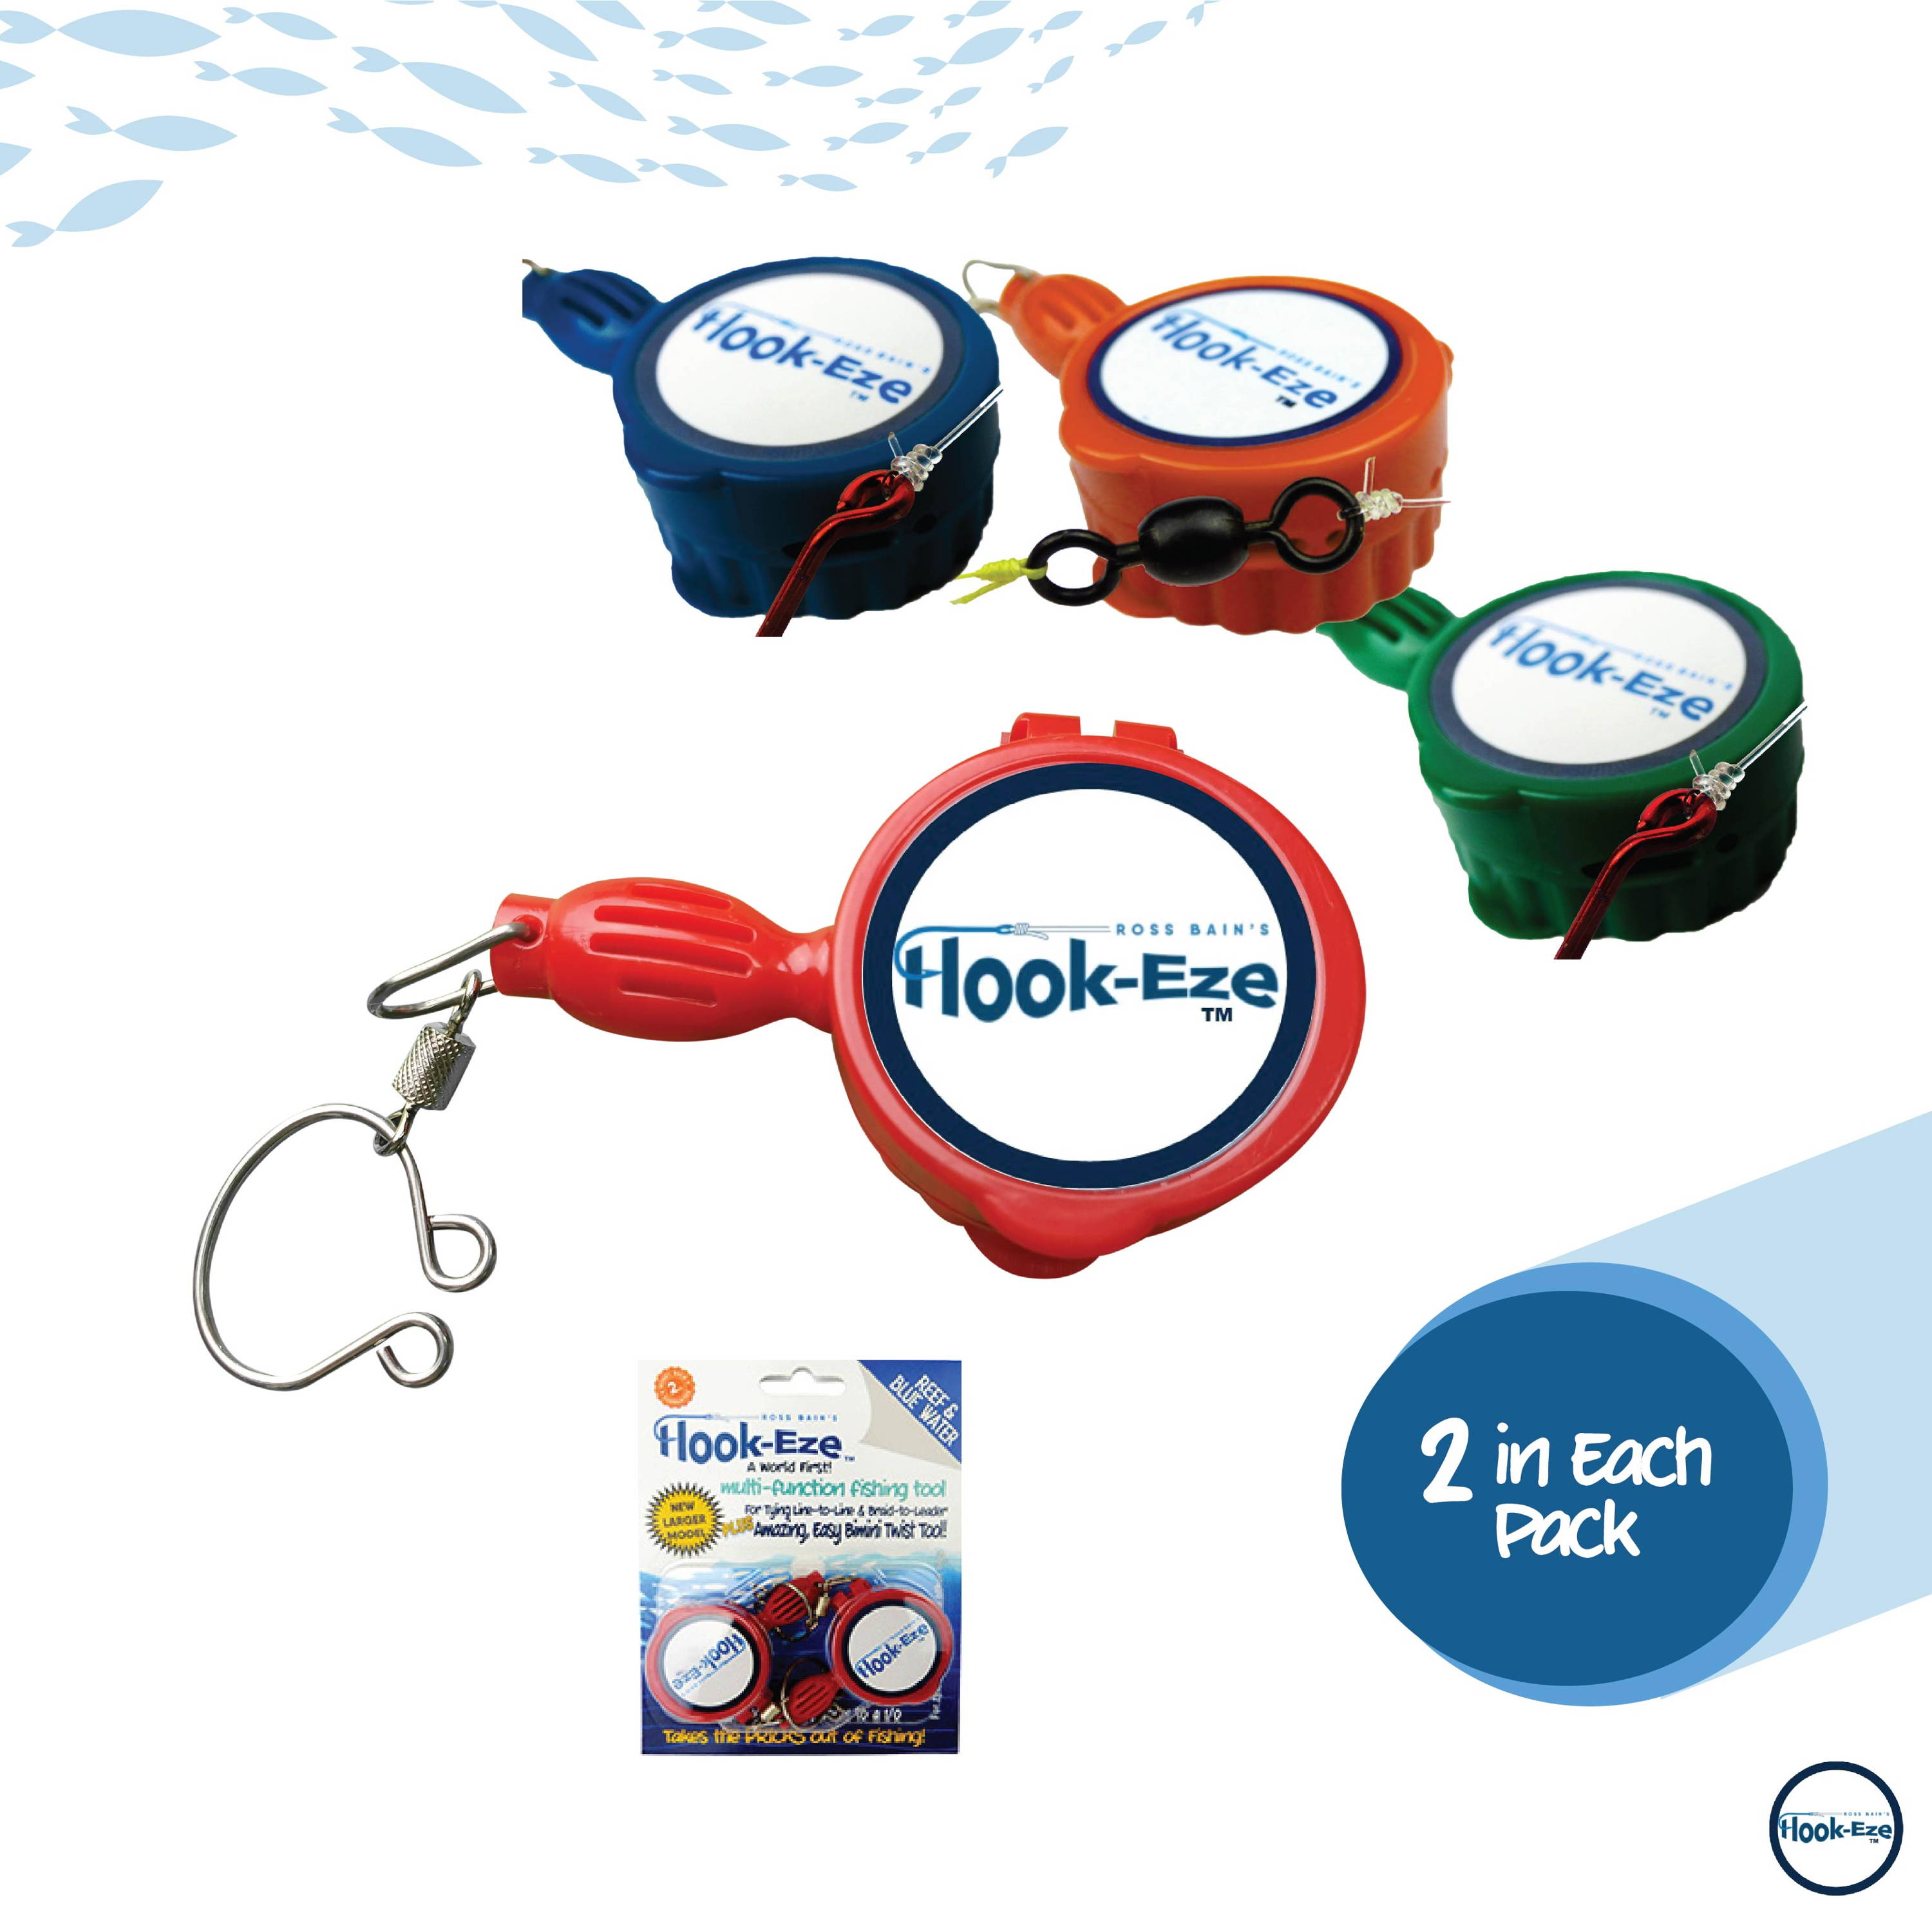 Hook-Eze 3x Large Knot Tying Tool Cover 6 Fishing Rods – Hook-Eze